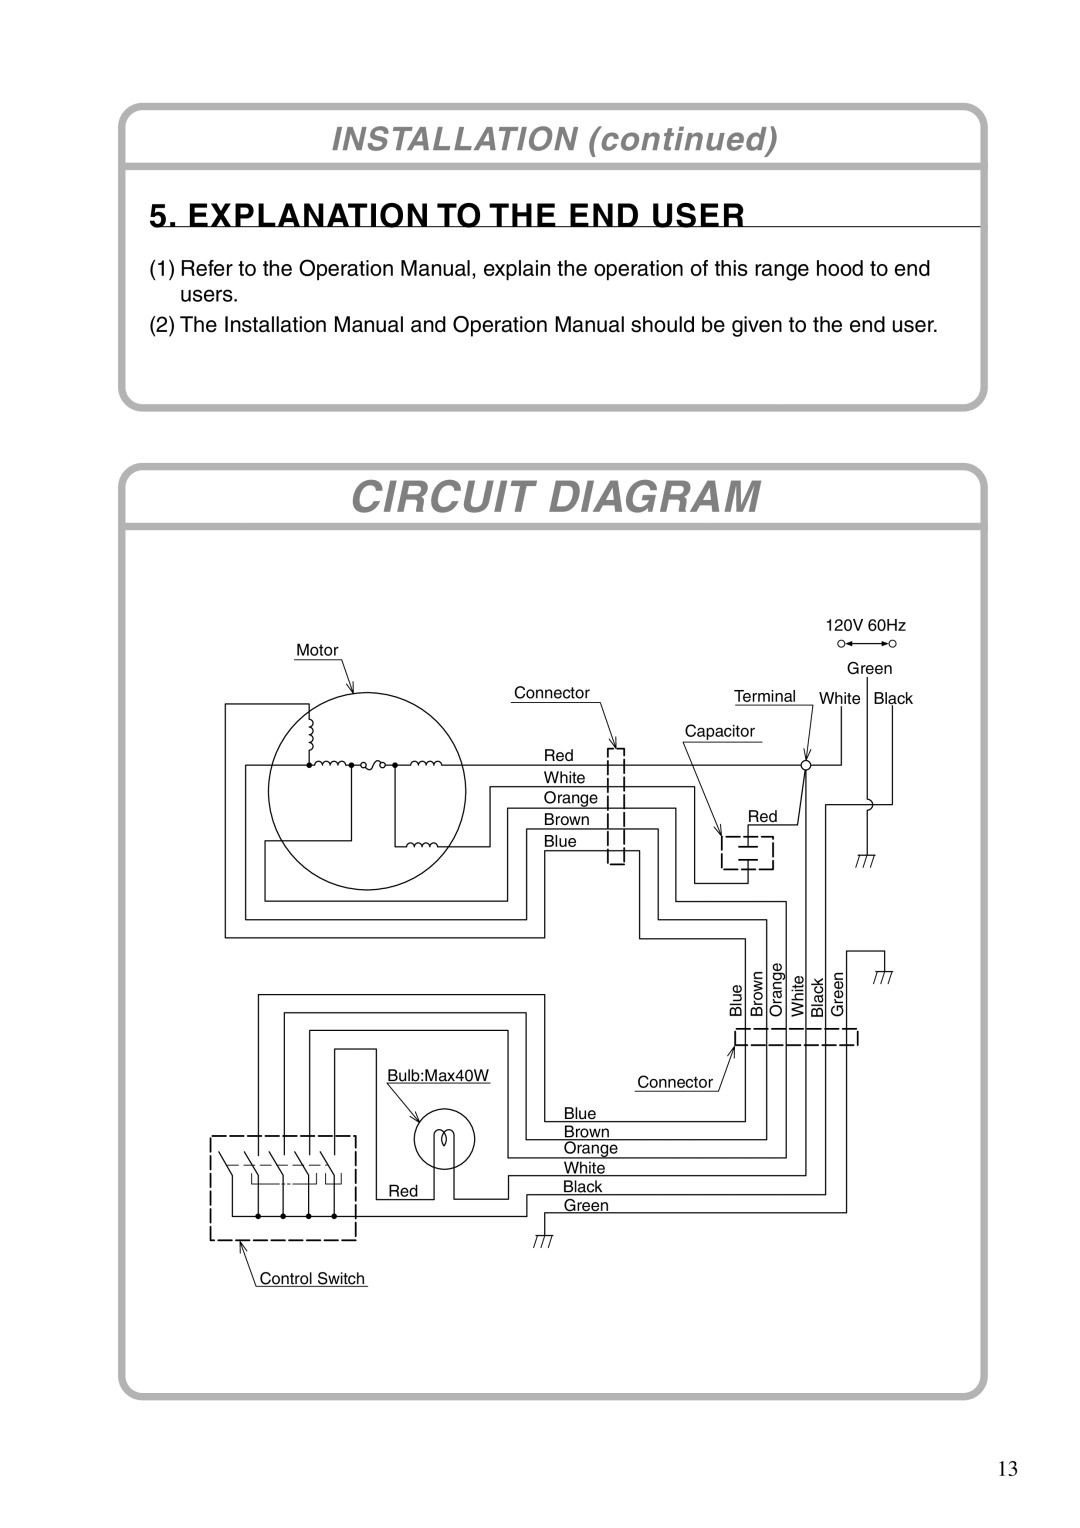 Fujioh BUF-01, BUF-02 installation manual Circuit Diagram, Explanation To The End User, INSTALLATION continued 